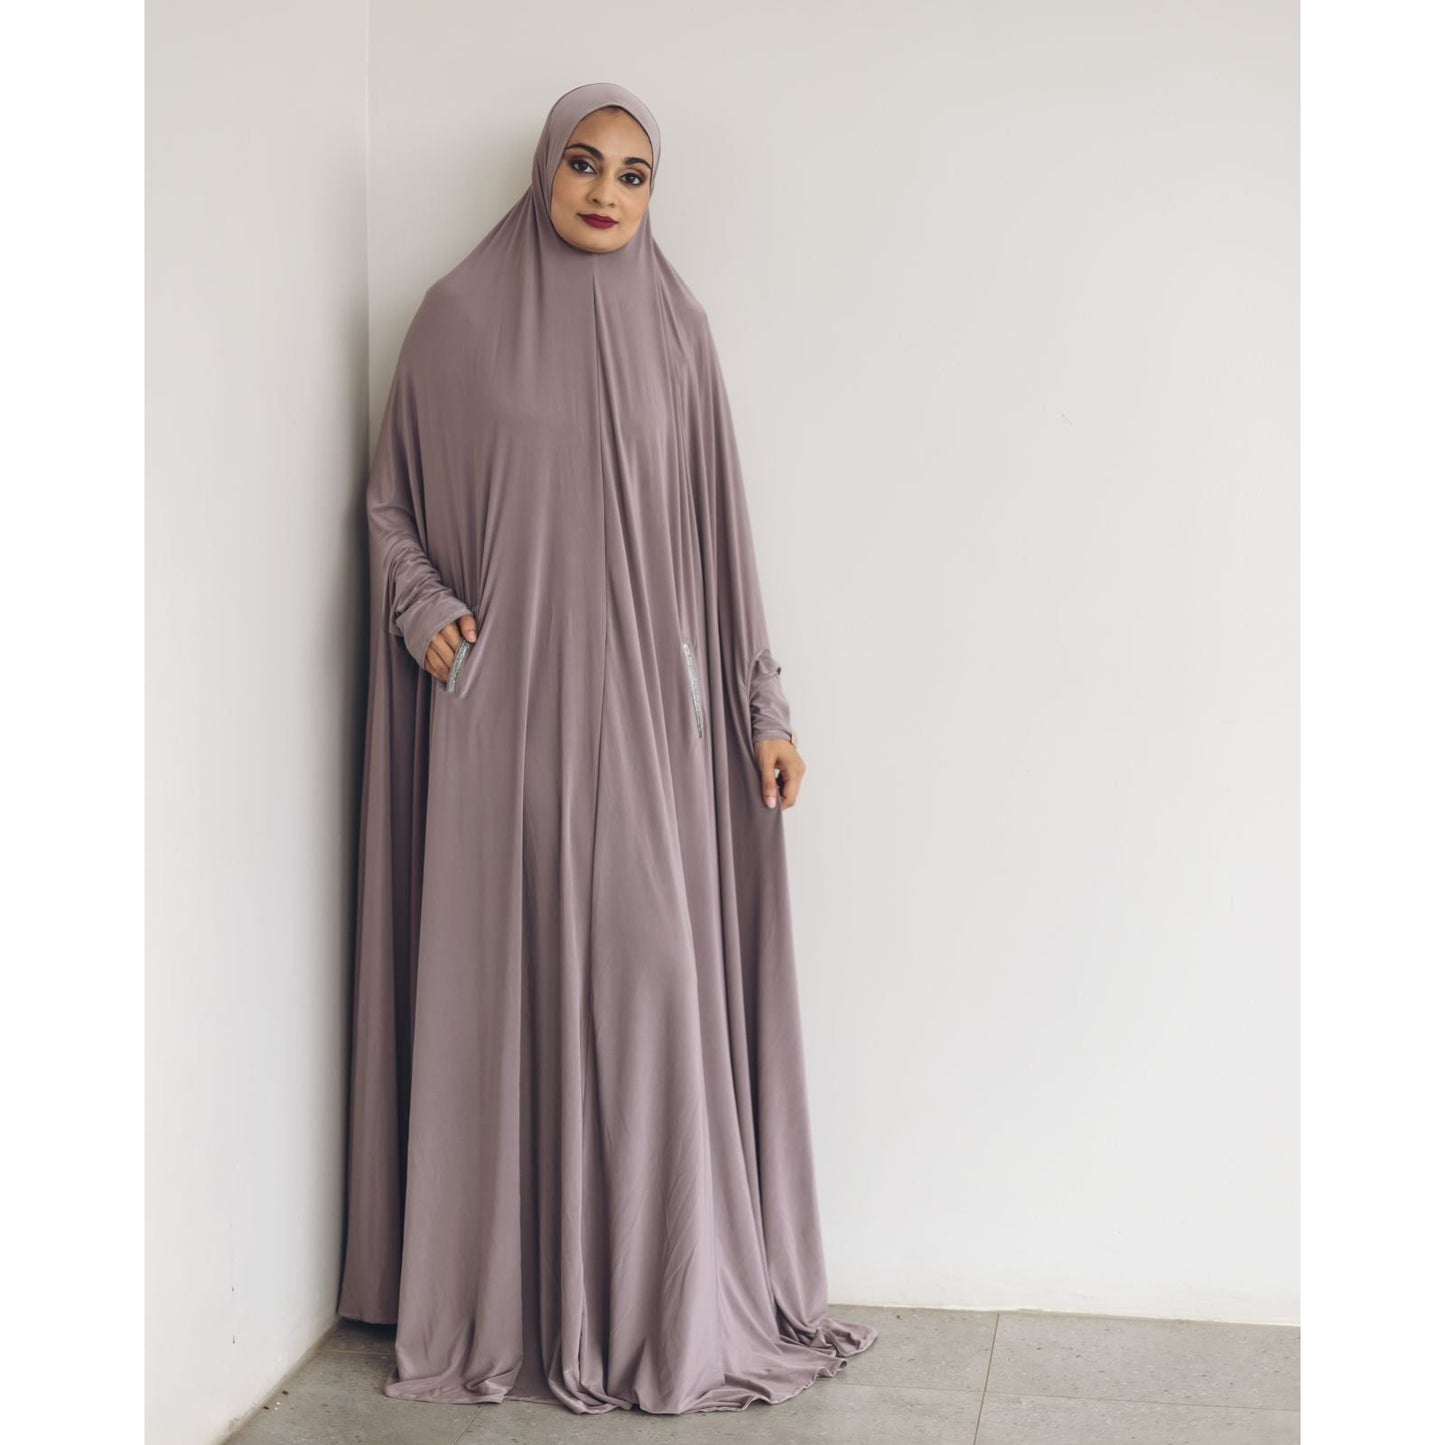 Pocket Burqa With Sleeves - Full Length: Full Stone